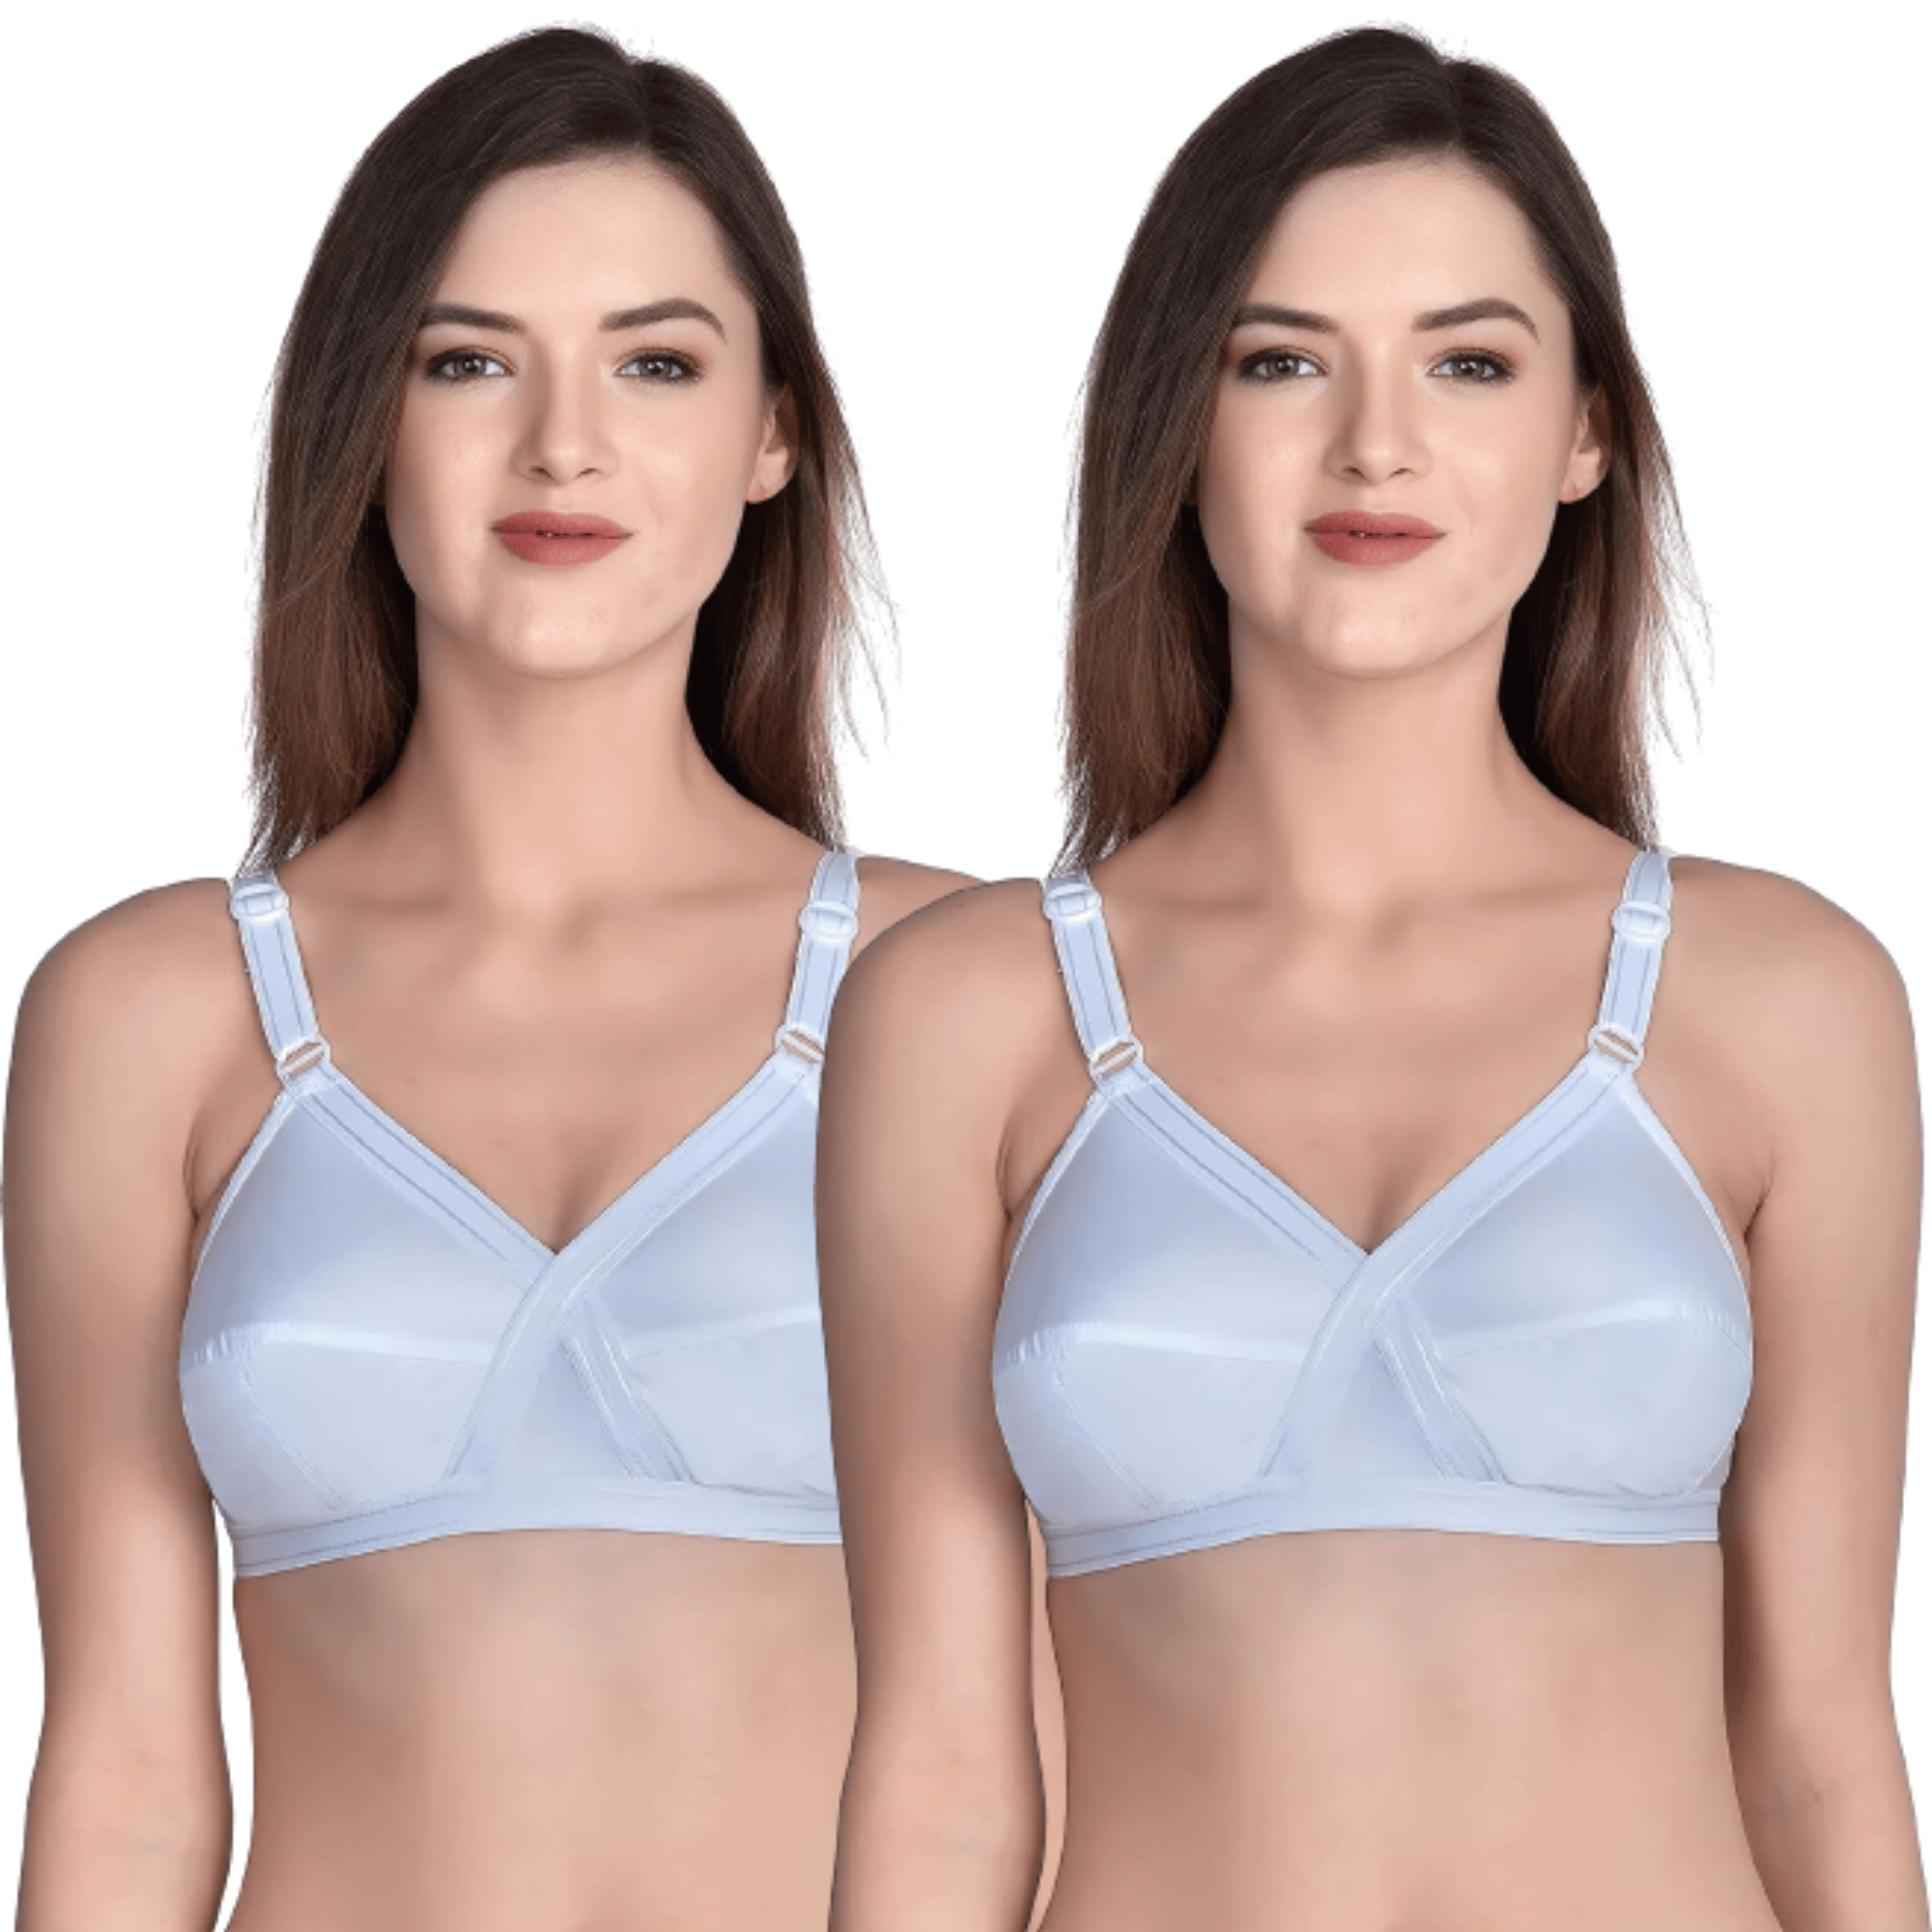 Pack of 2 cotton bras - Bras - Underwear - CLOTHING - Woman